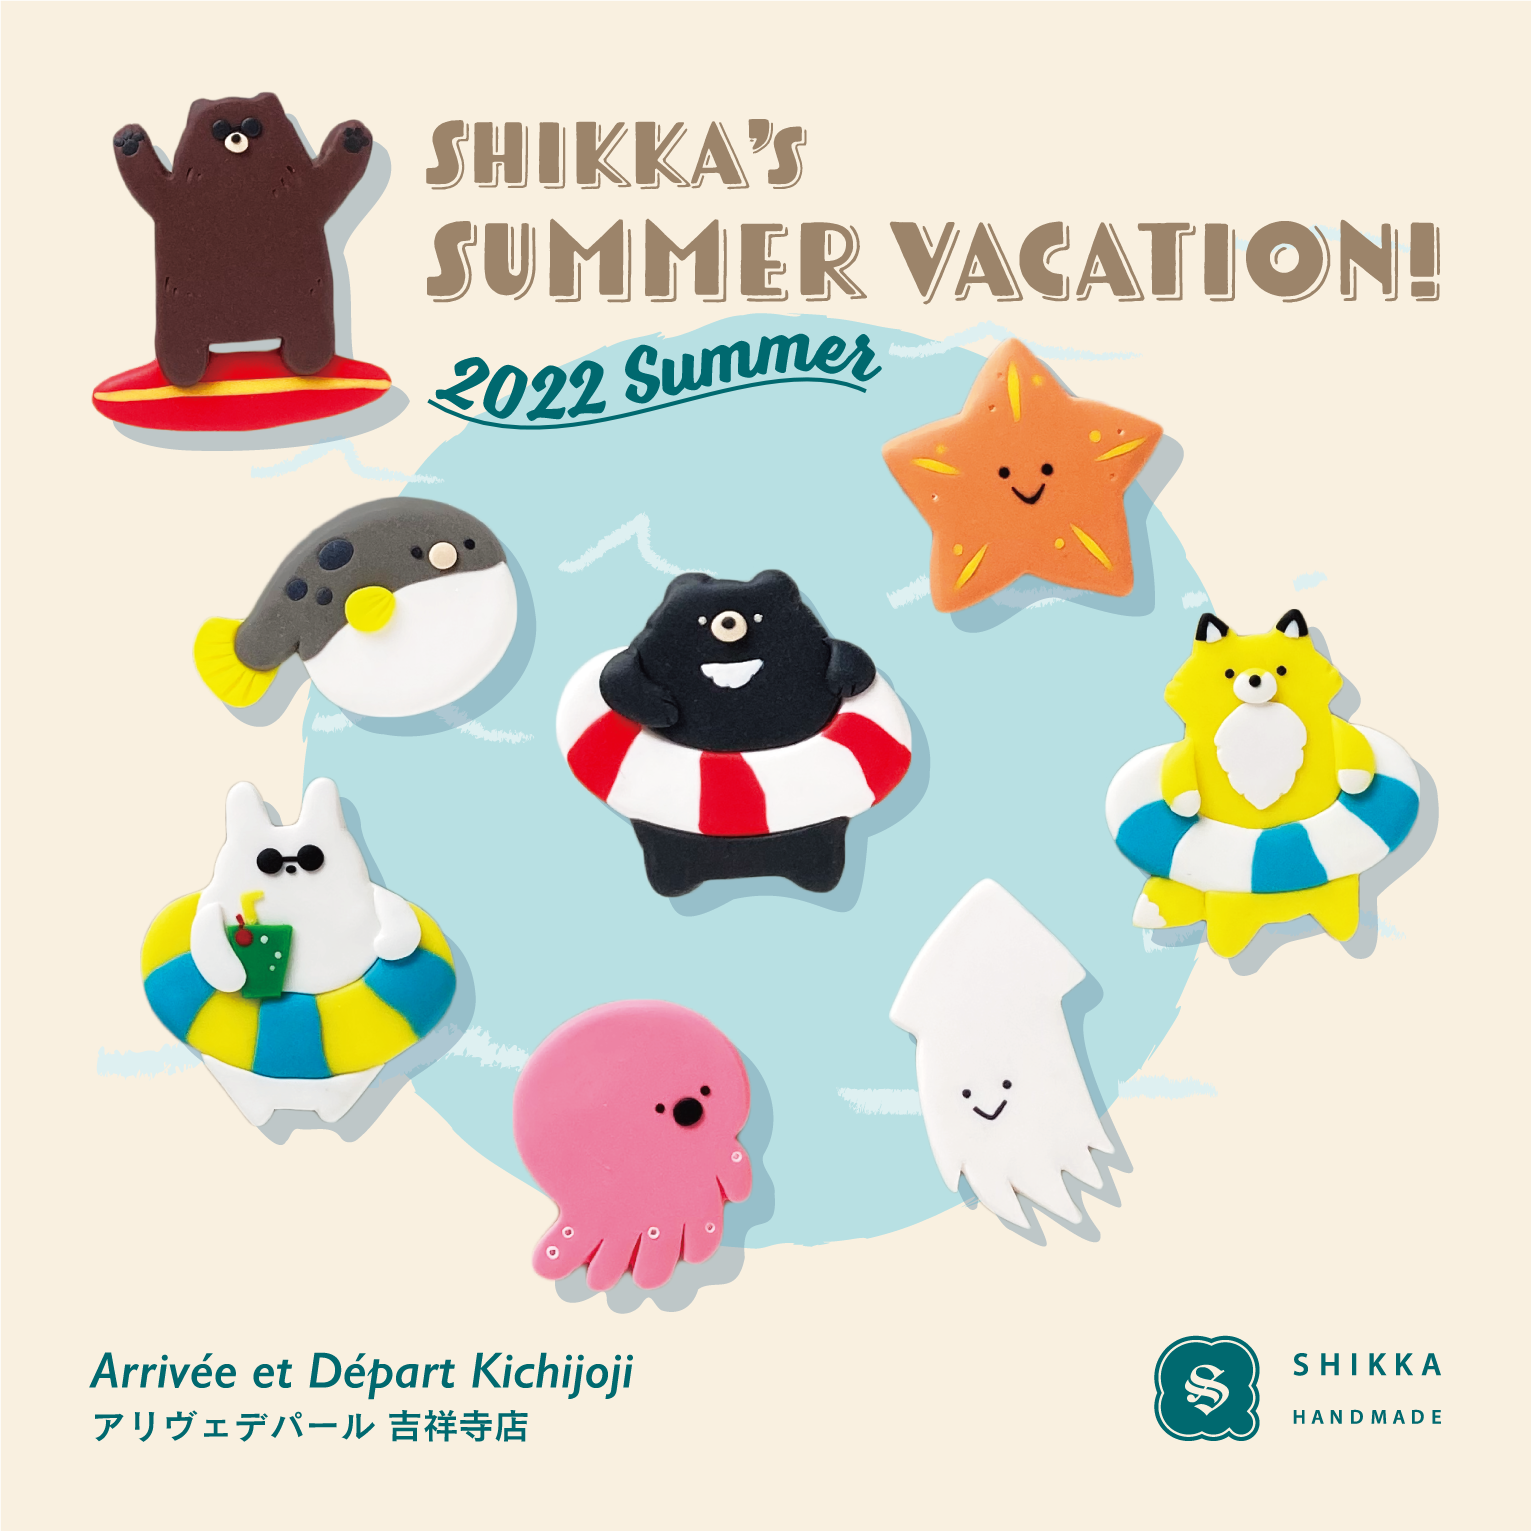 SHIKKA's SUMMER VACATION!